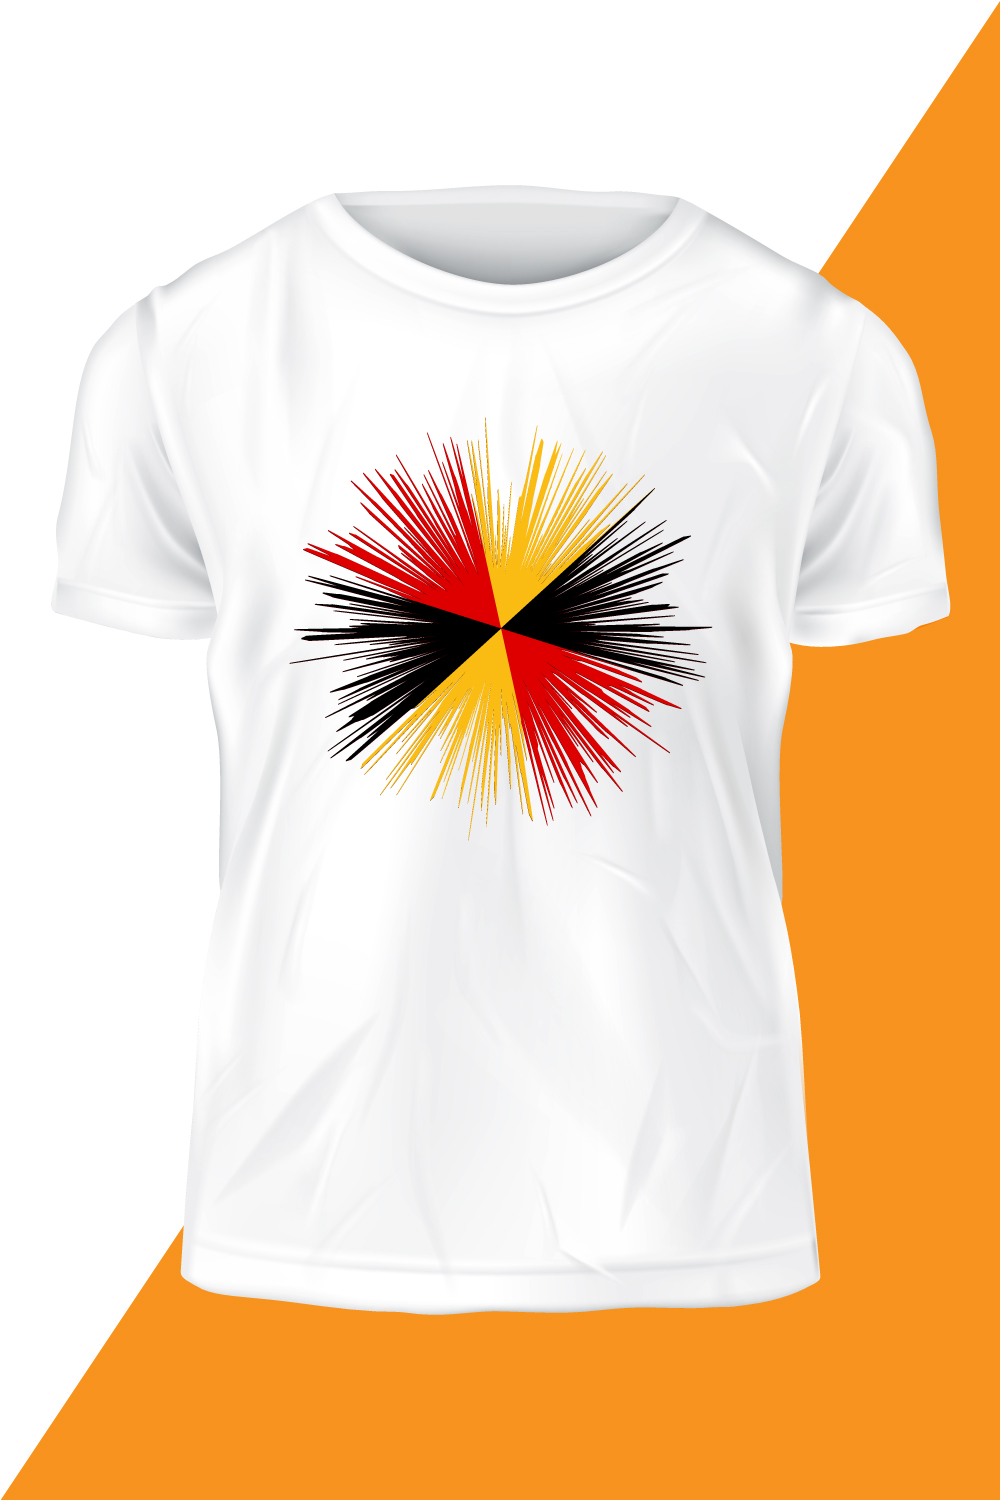 Professional Germany Flag Vector Template Design pinterest image.